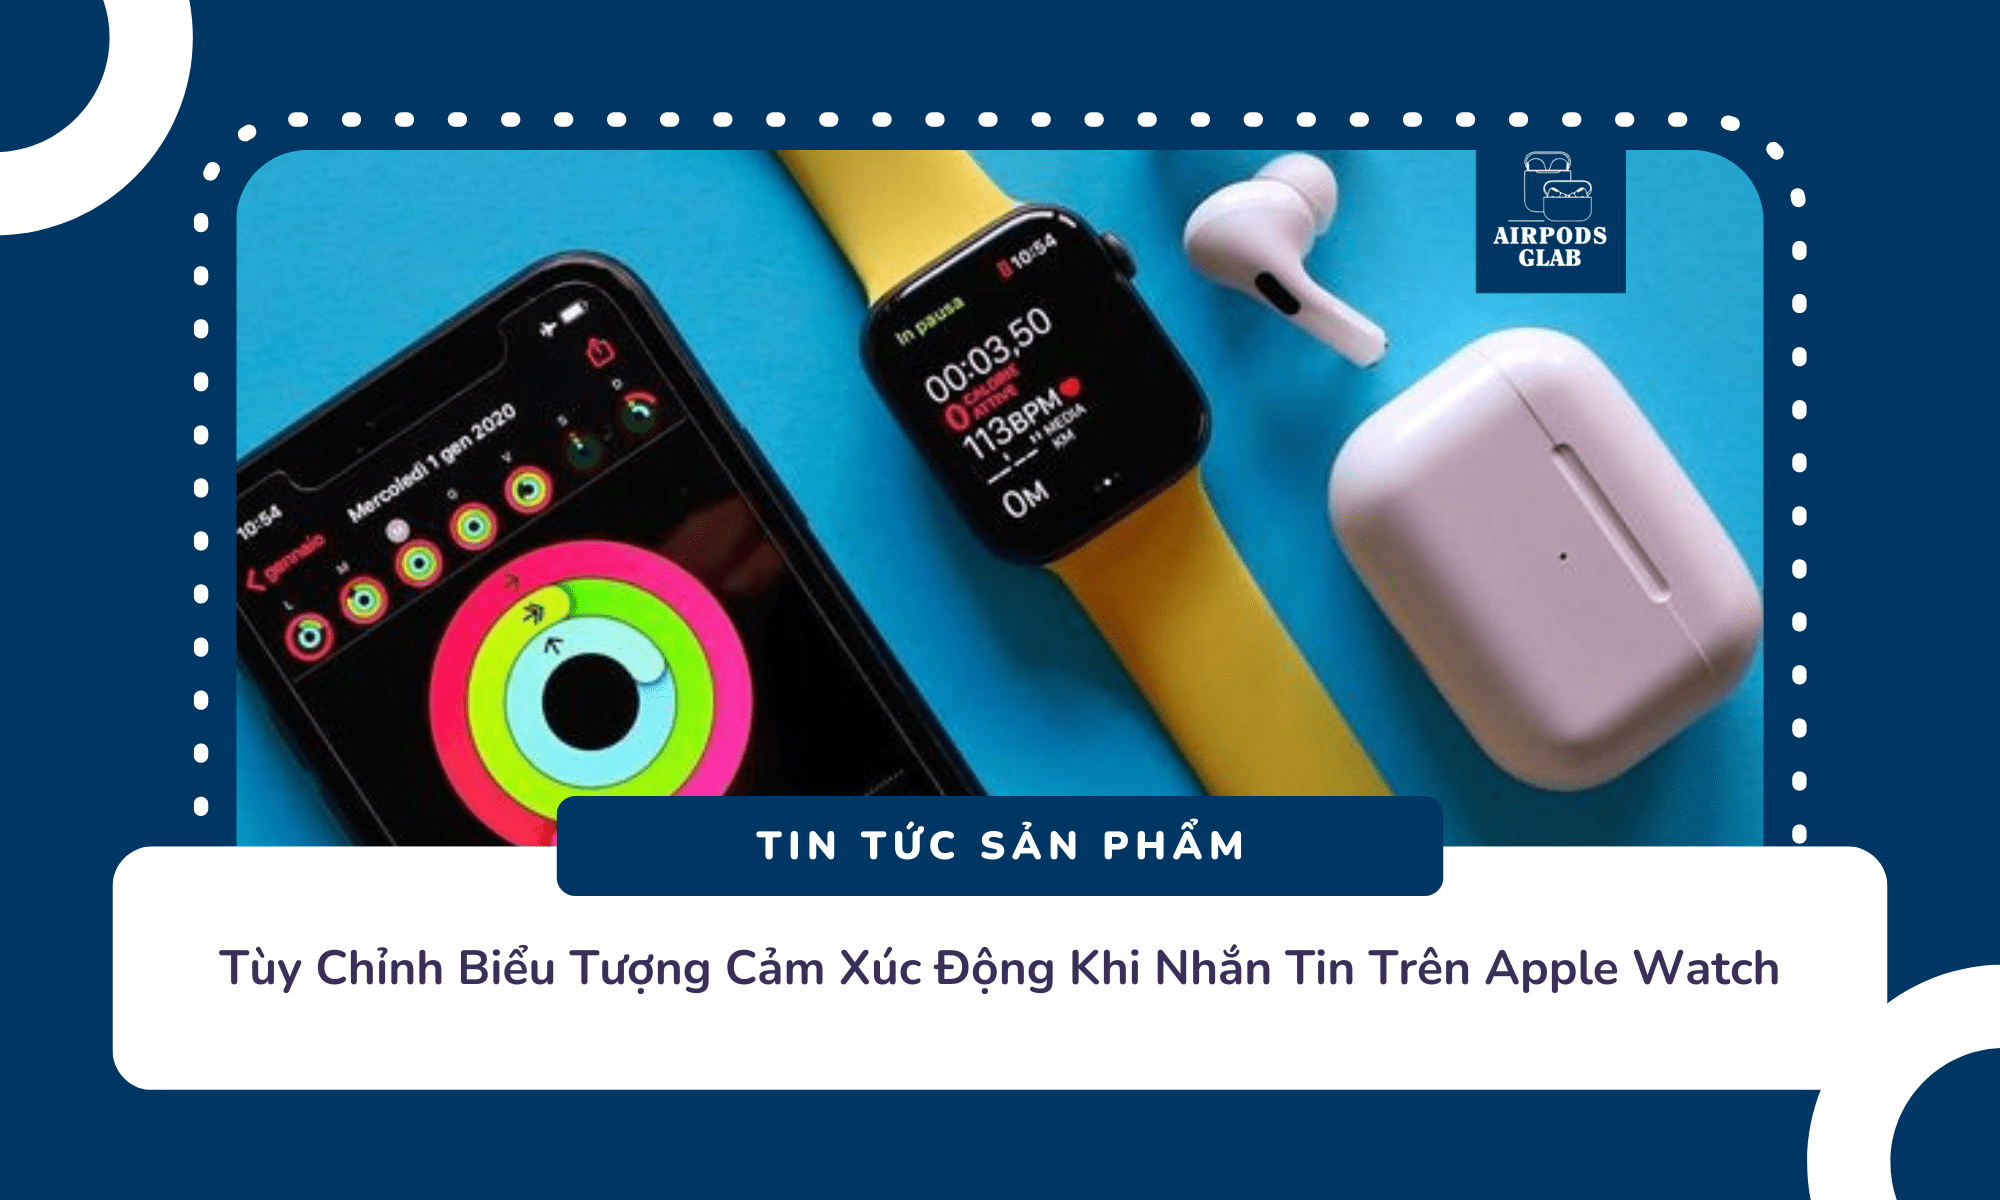 cach-nhan-tin-tren-apple-watch 